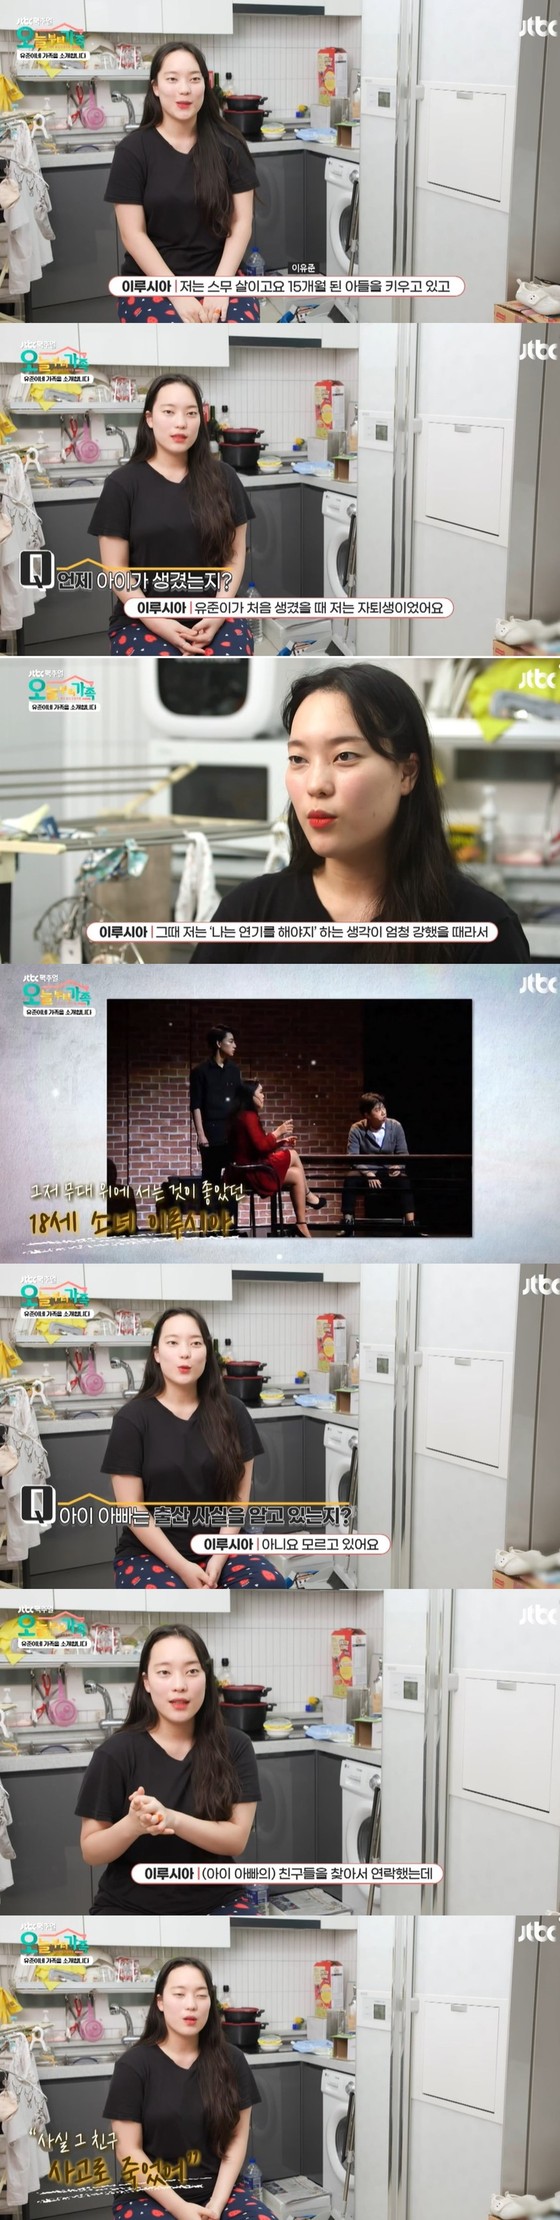 JTBC 시사 교양 프로그램 'JTBC FACTUAL - 오늘부터 가족' 방송 화면 갈무리 © 뉴스1